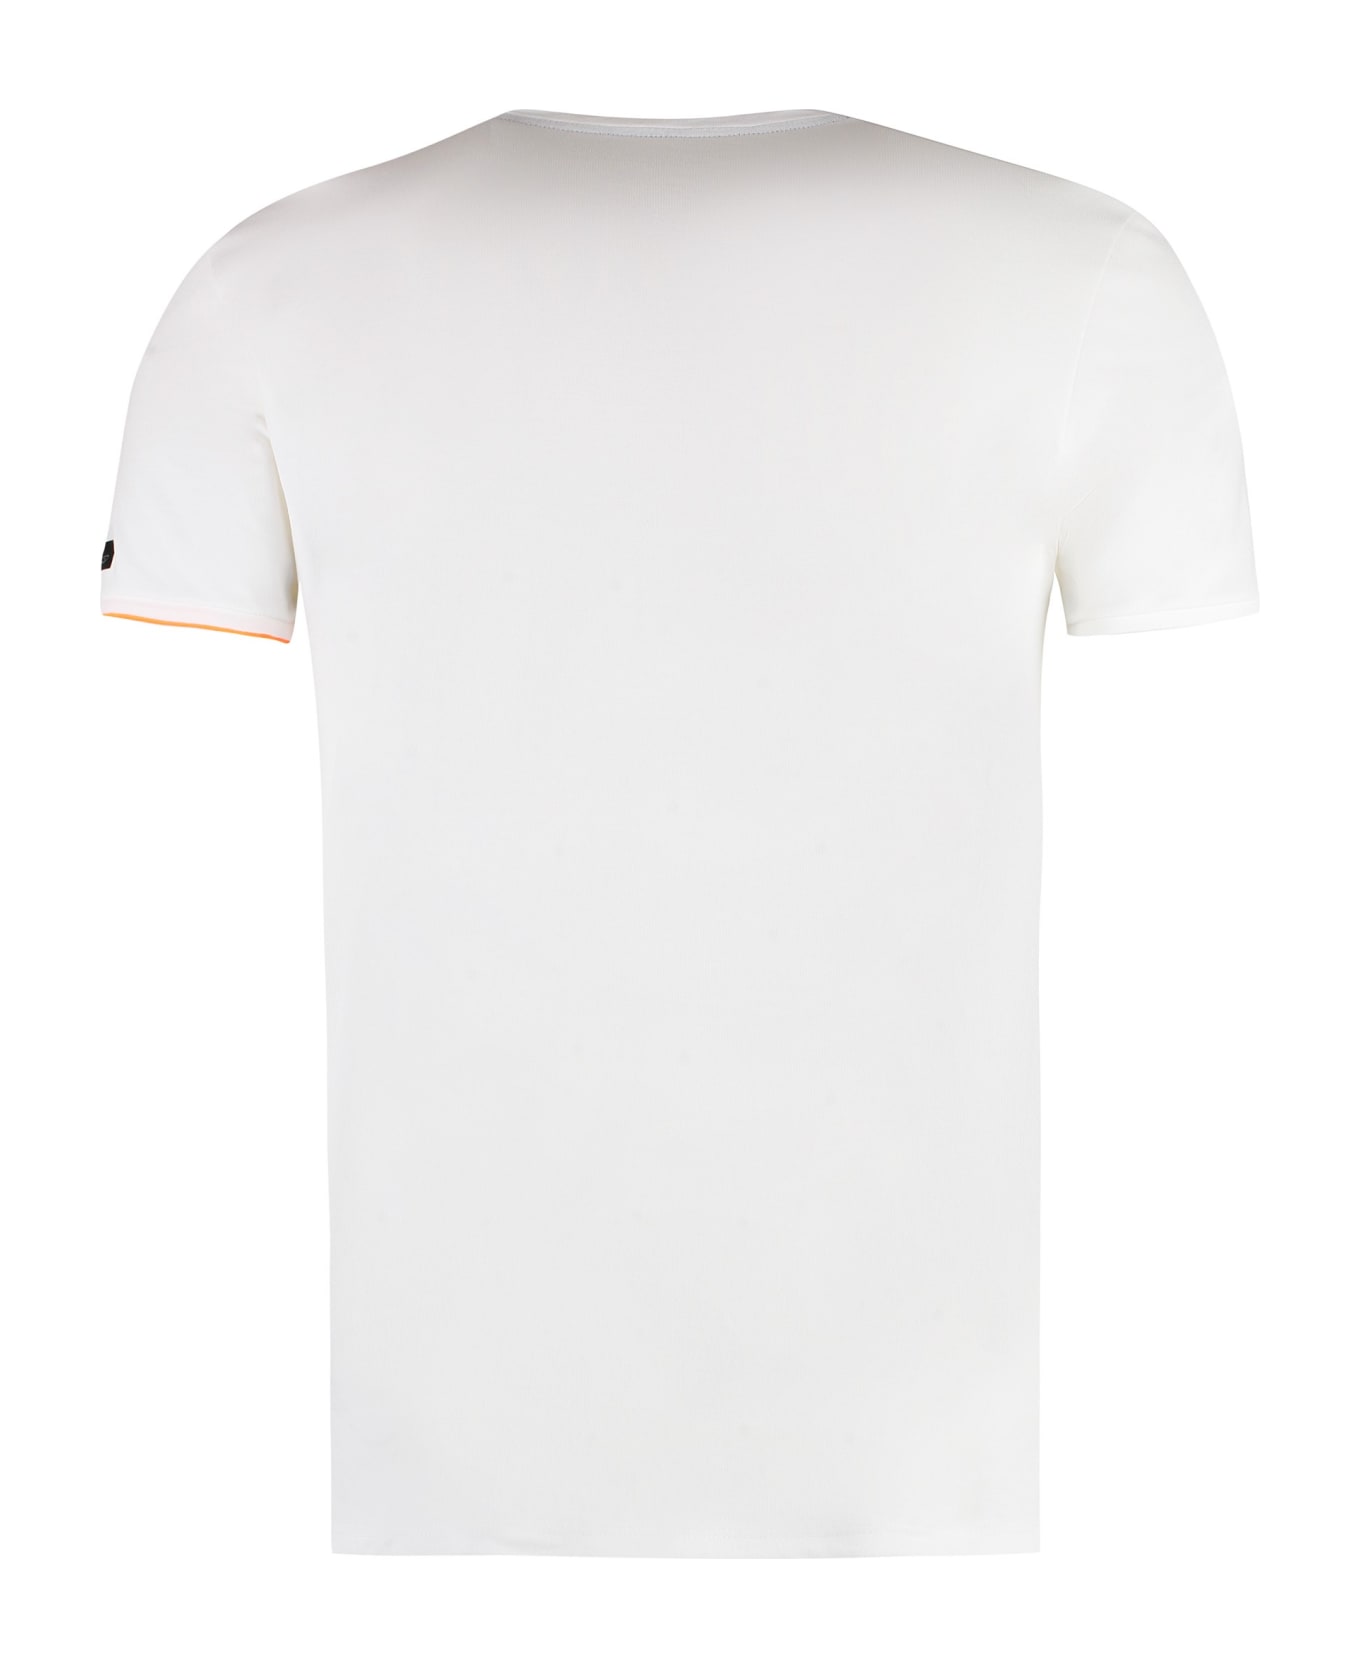 RRD - Roberto Ricci Design Cotton Blend T-shirt - Bianco